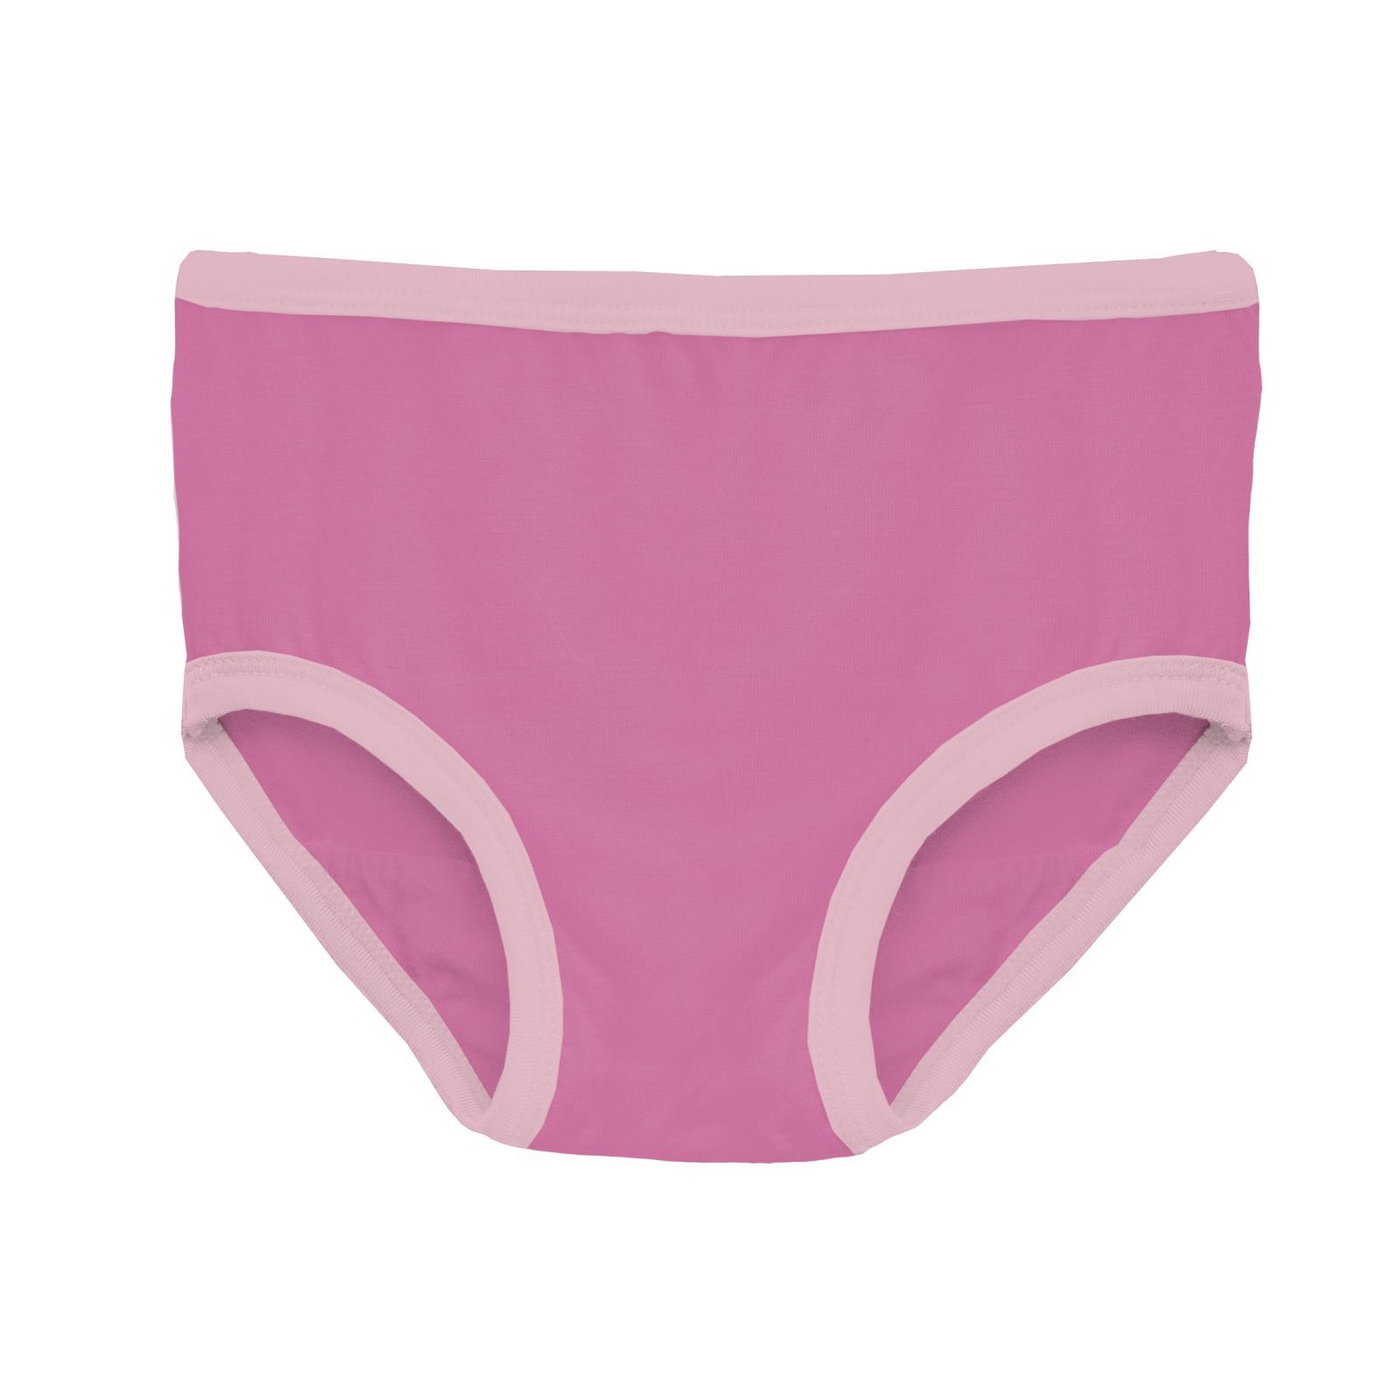 Kickee Pants Girl's Underwear Set of 3: Cake Pop Tea Party, Tulip & Natural Axolotl Party